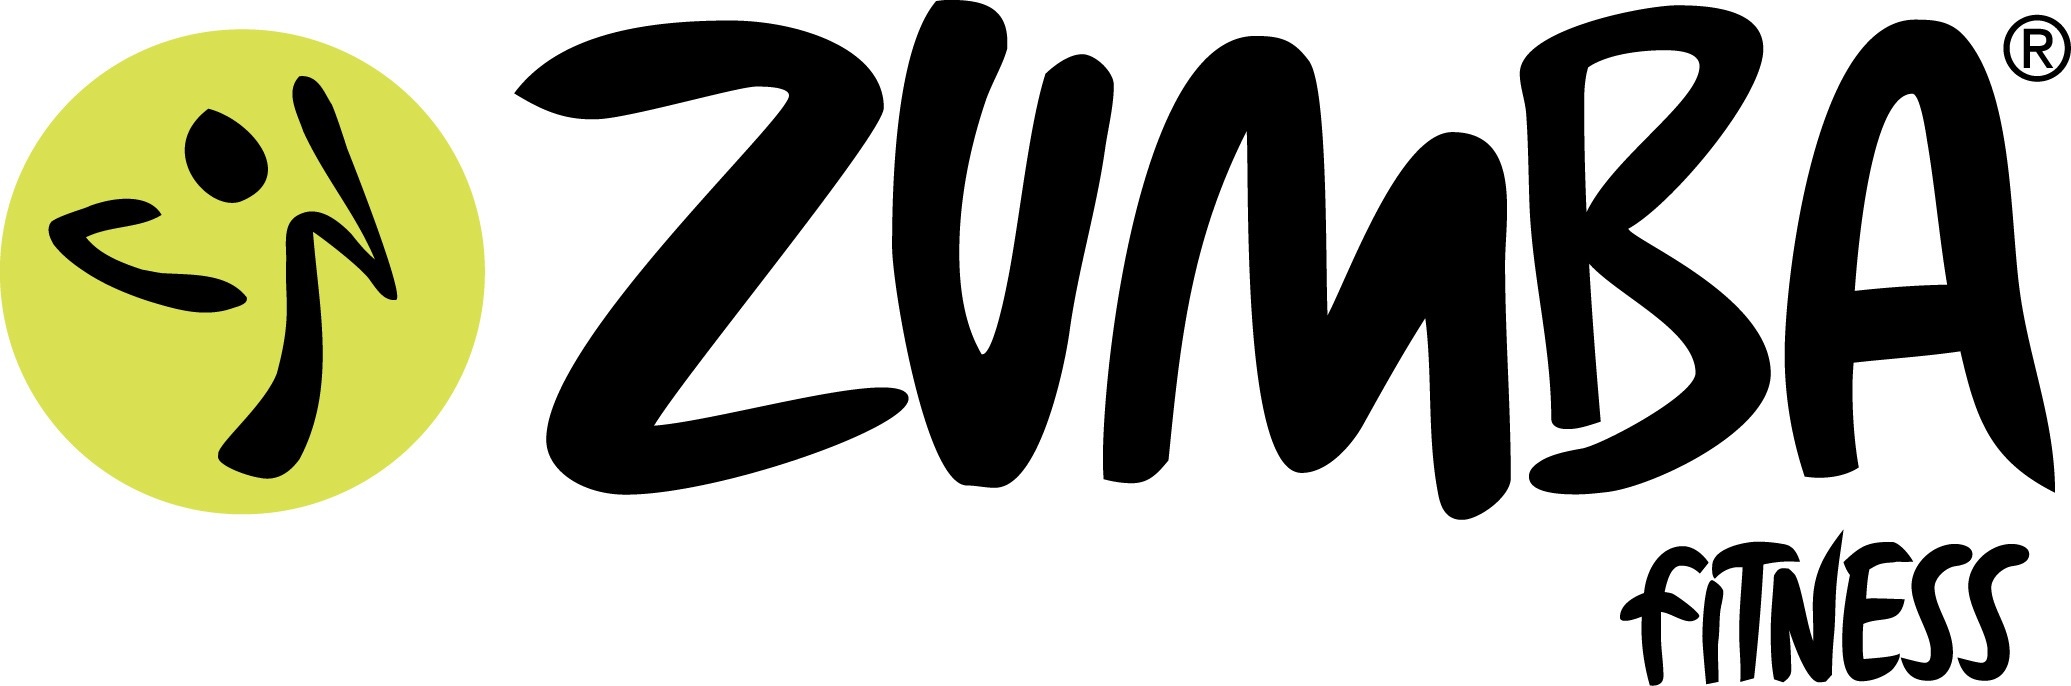 New Zumba image